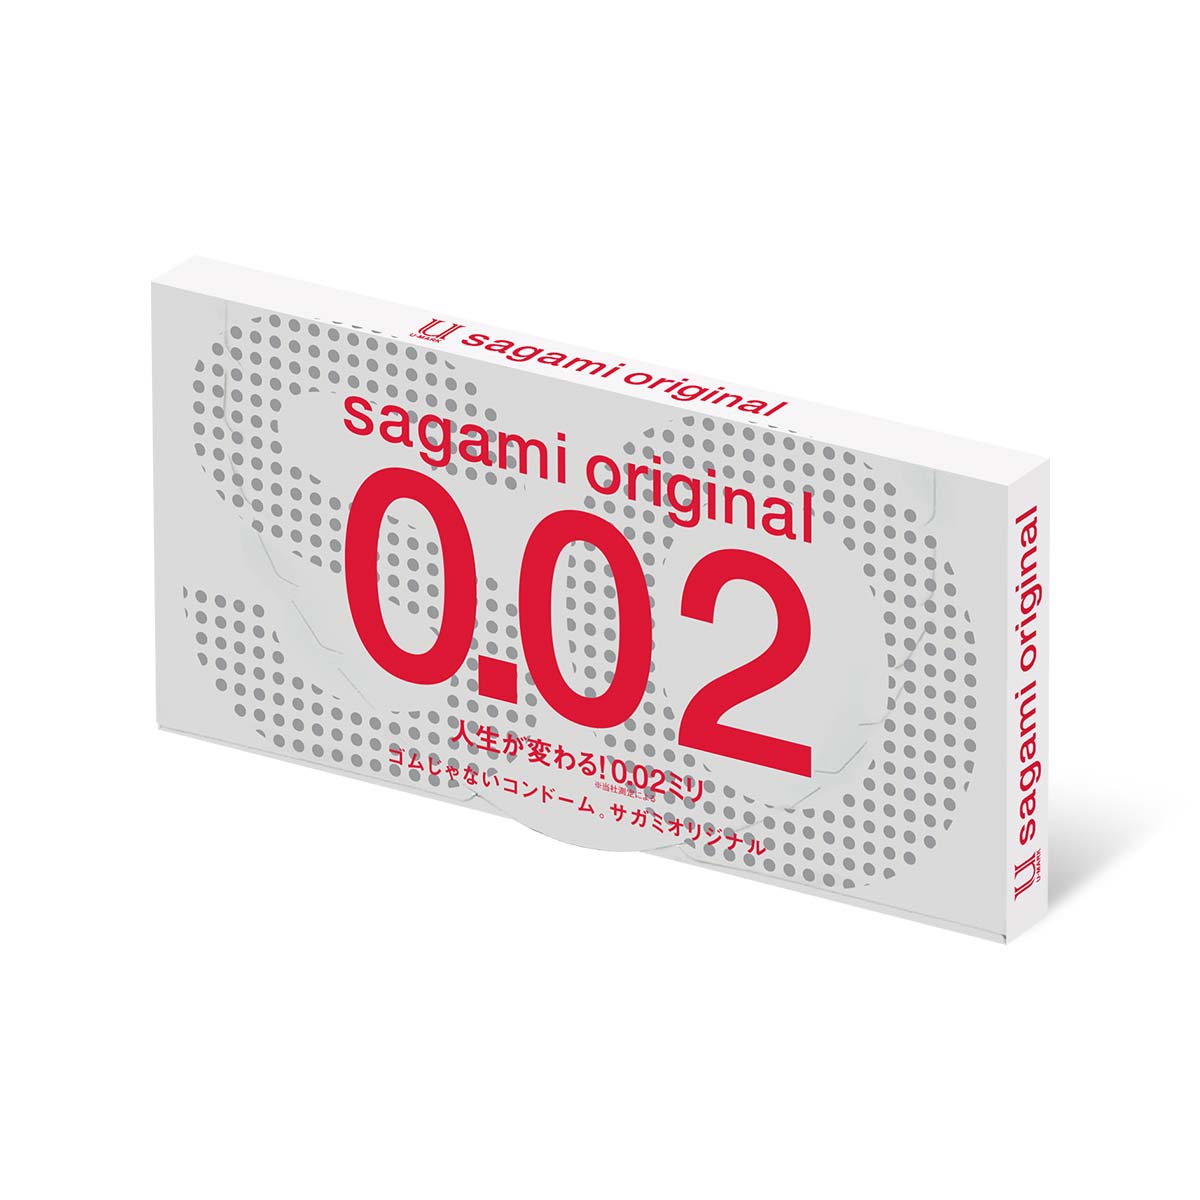 Sagami Original 0.02 2's Pack PU Condom (Short expiry)-p_1